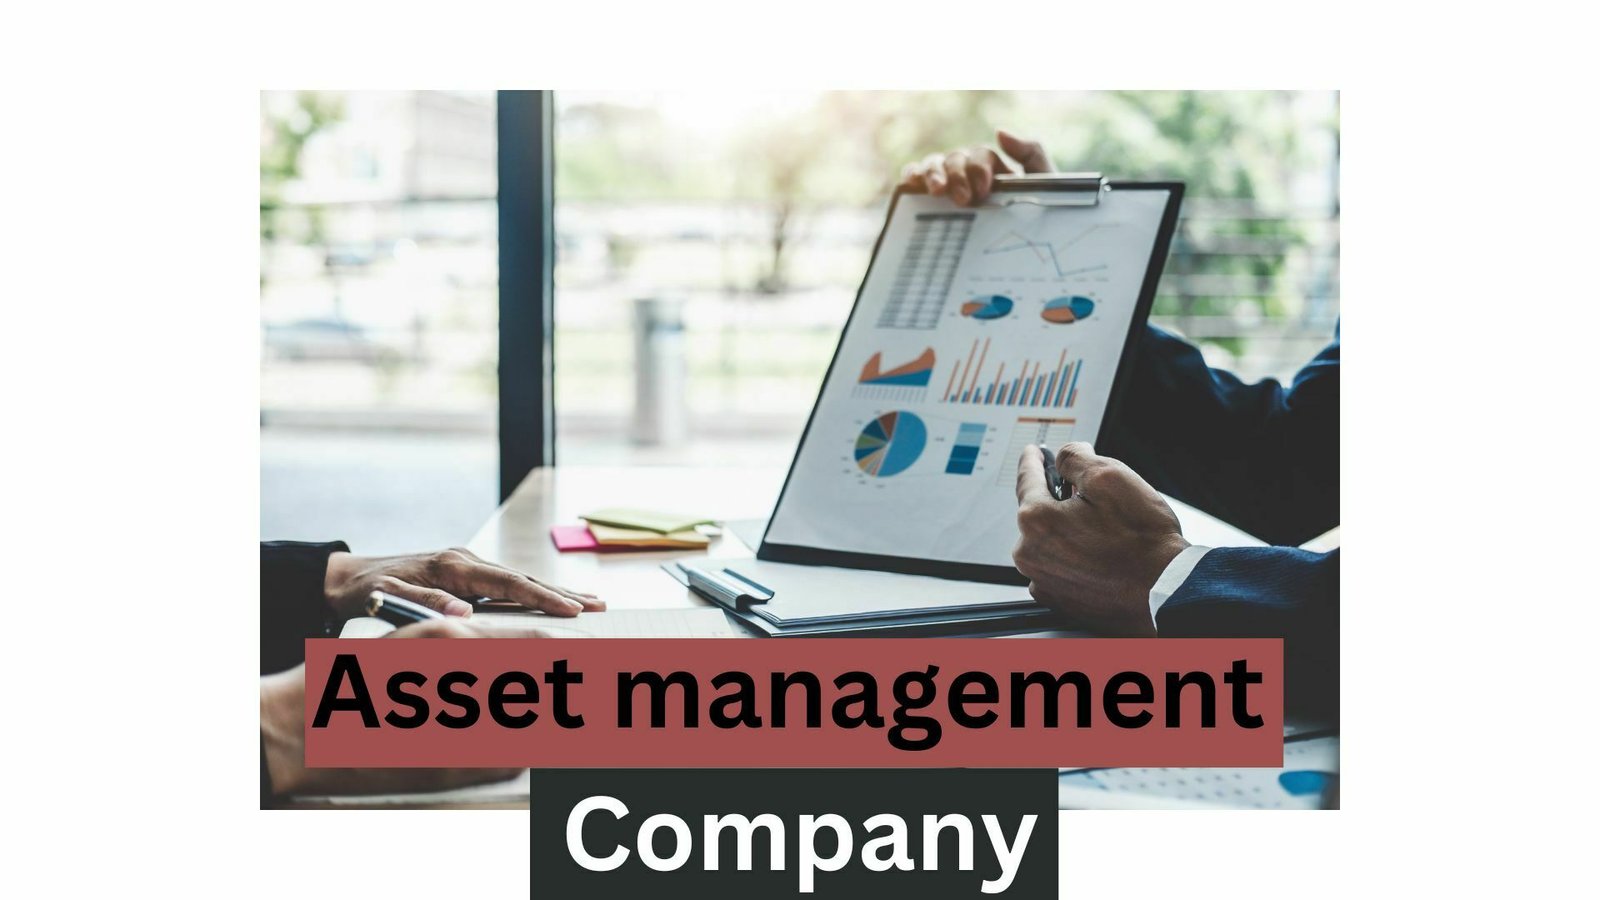 Asset management company